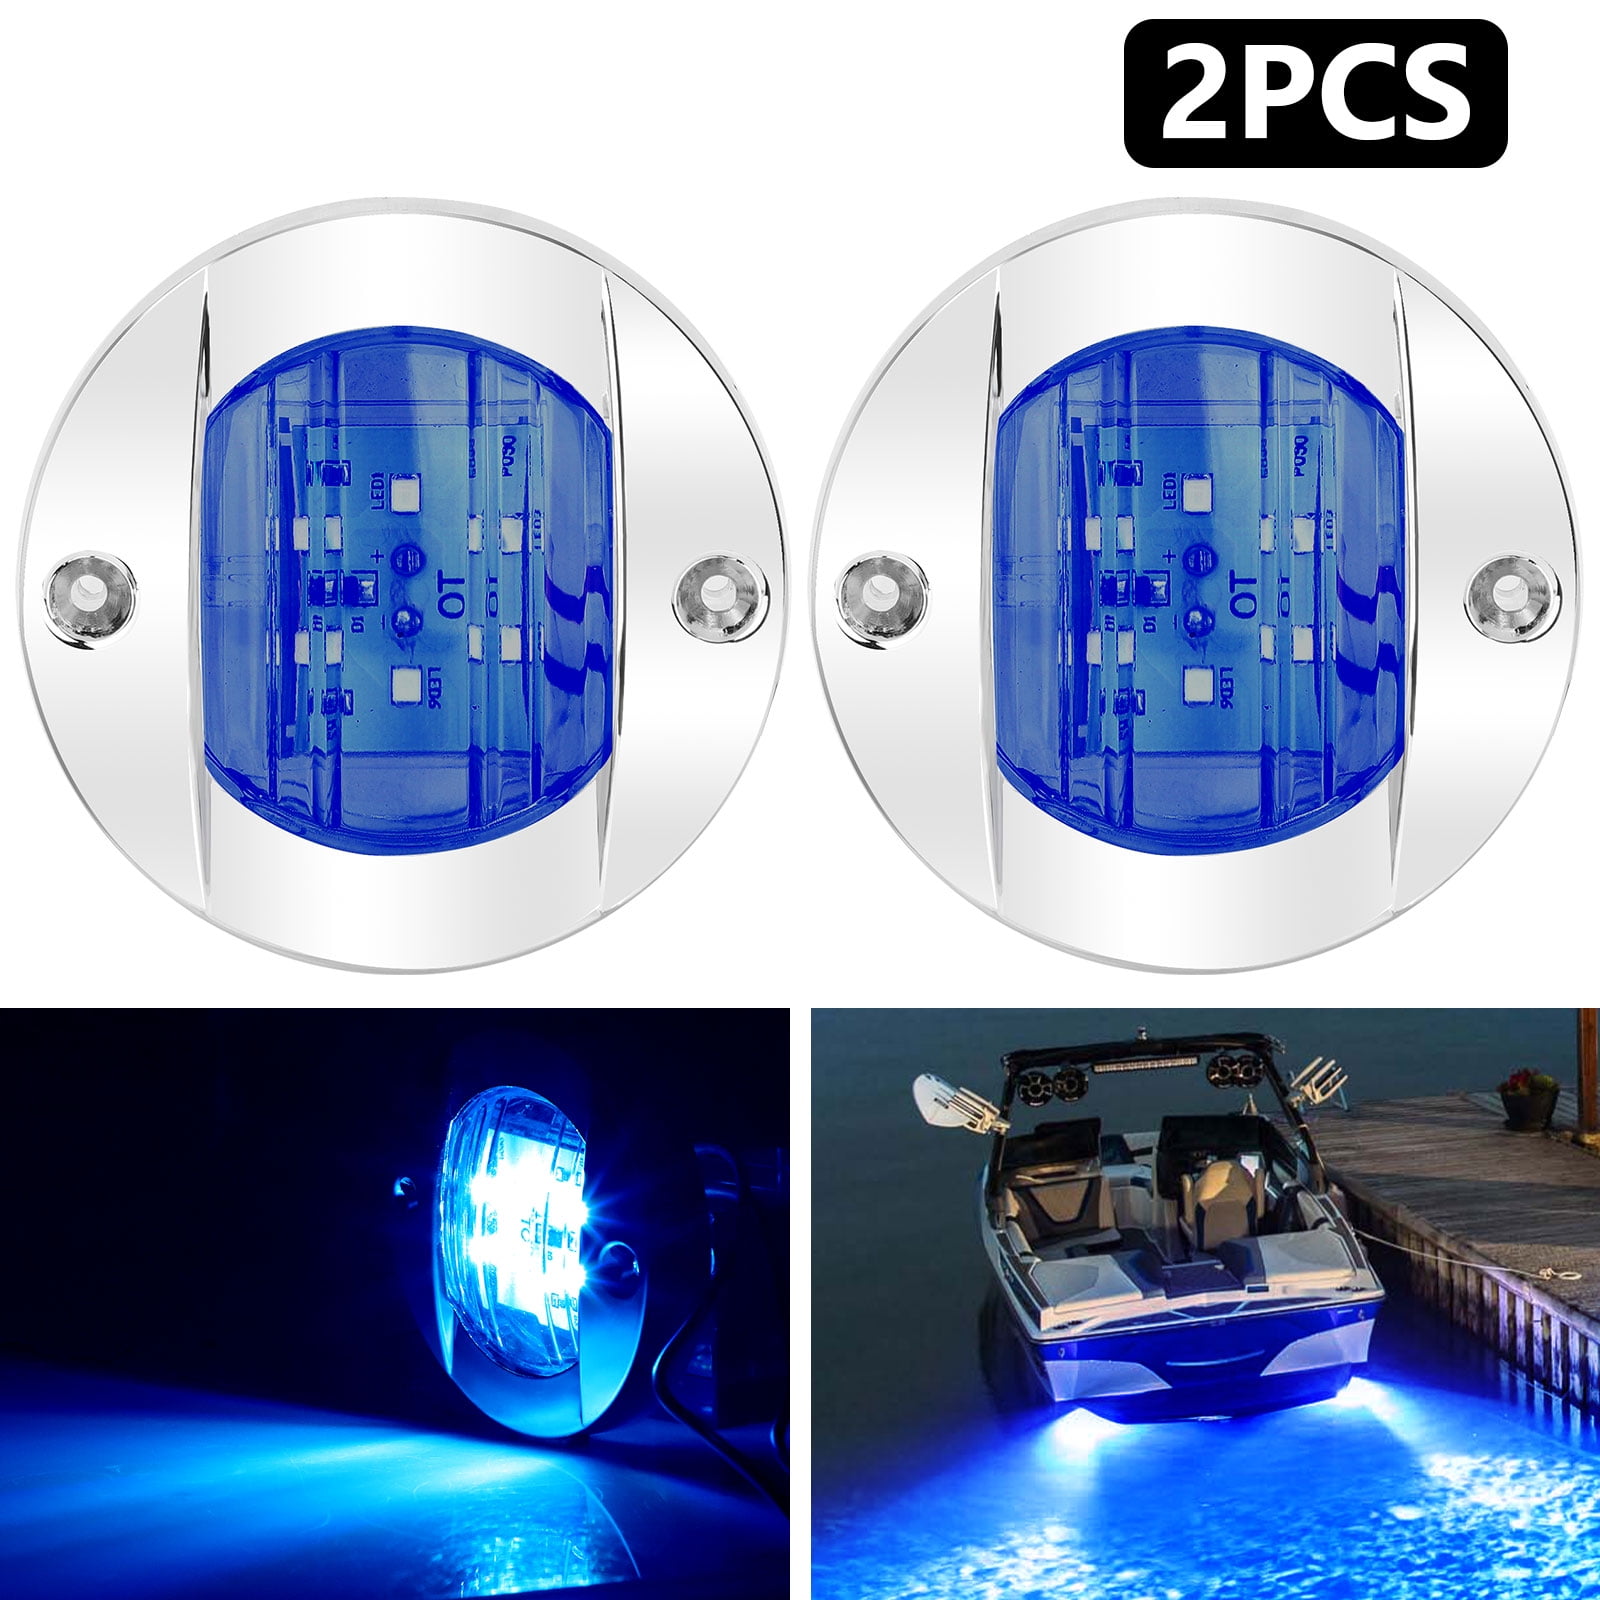 2PCS 12V DC BLUE LED STRIP LIGHT WITH ADHESIVE 3M BACKING FOR KAYAK CANOE BOATS 